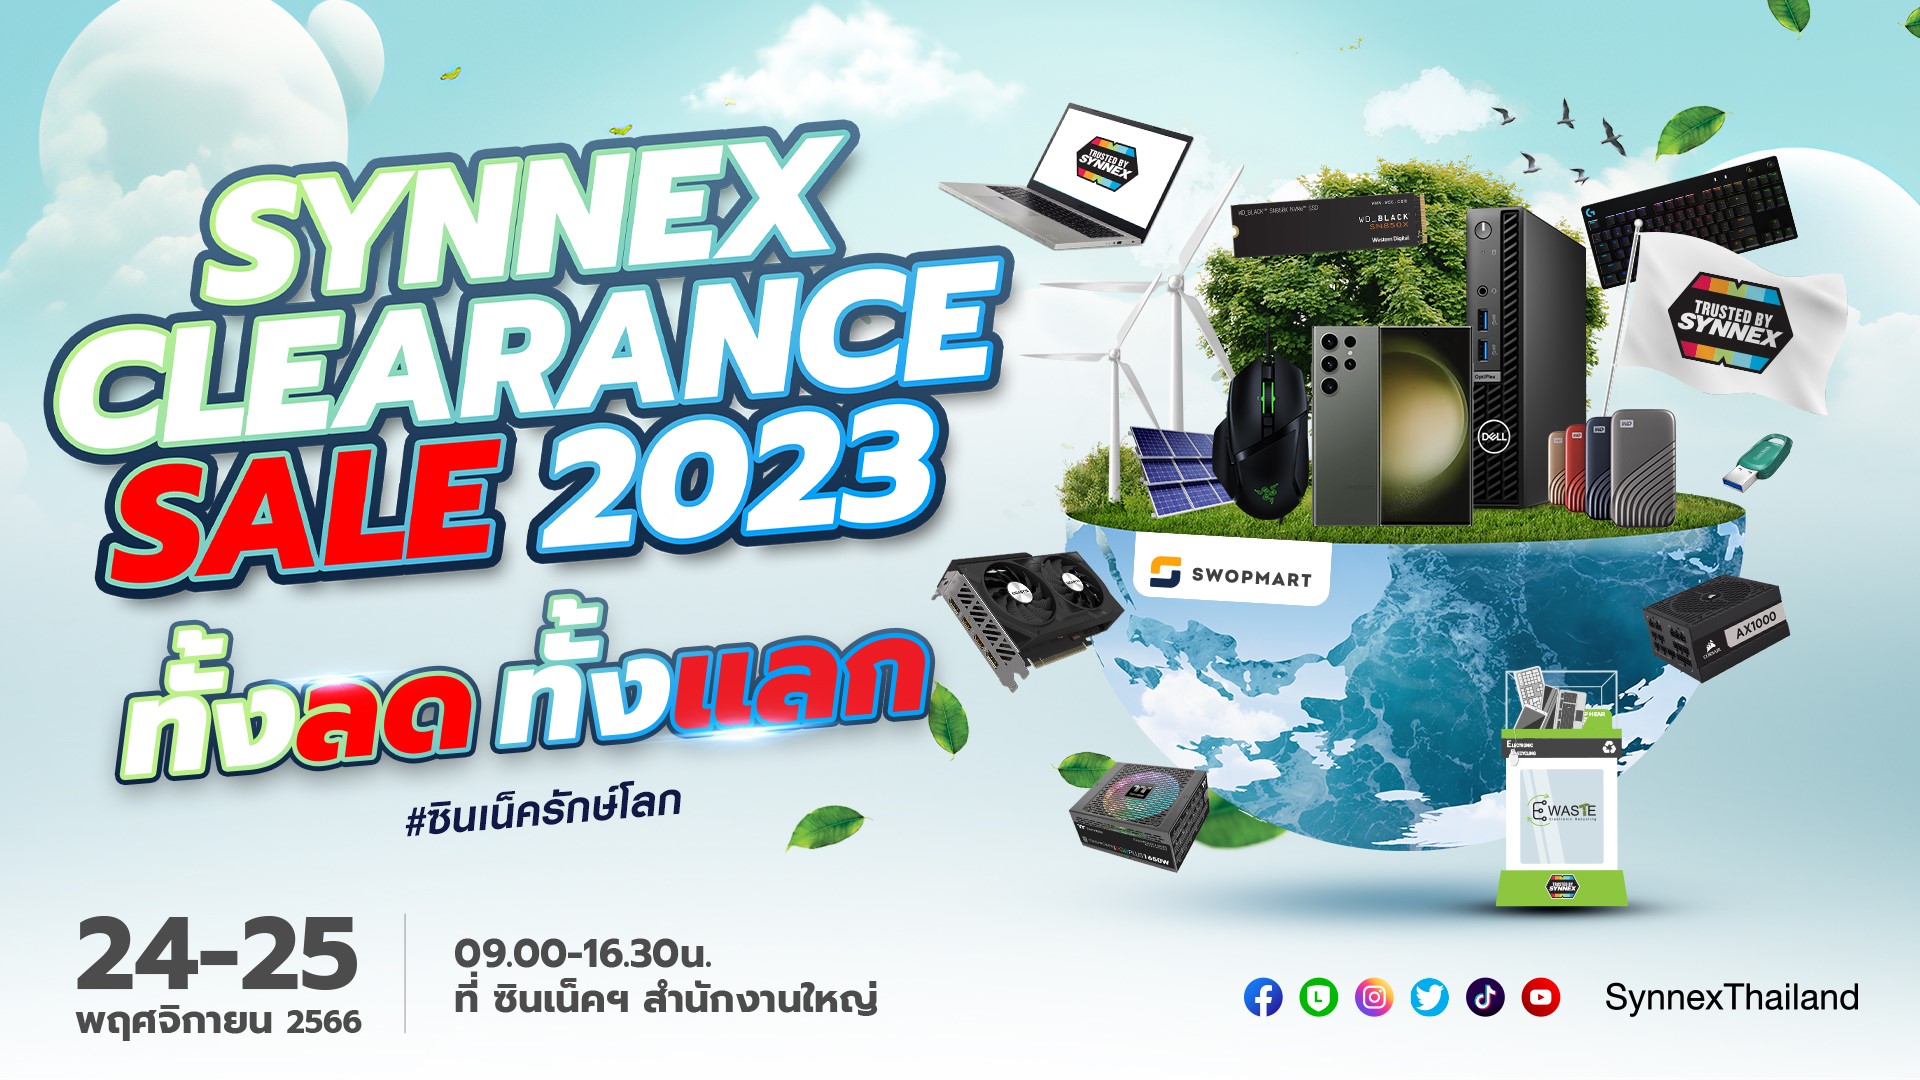 SYNEX เตรียมเปิดคลังขนสินค้า จัดลด-แลก แบบกระหน่ำ เต็มพื้นที่ “Synnex Clearance Sale 2023” วันที่ 24 - 25 พฤศจิกายน นี้